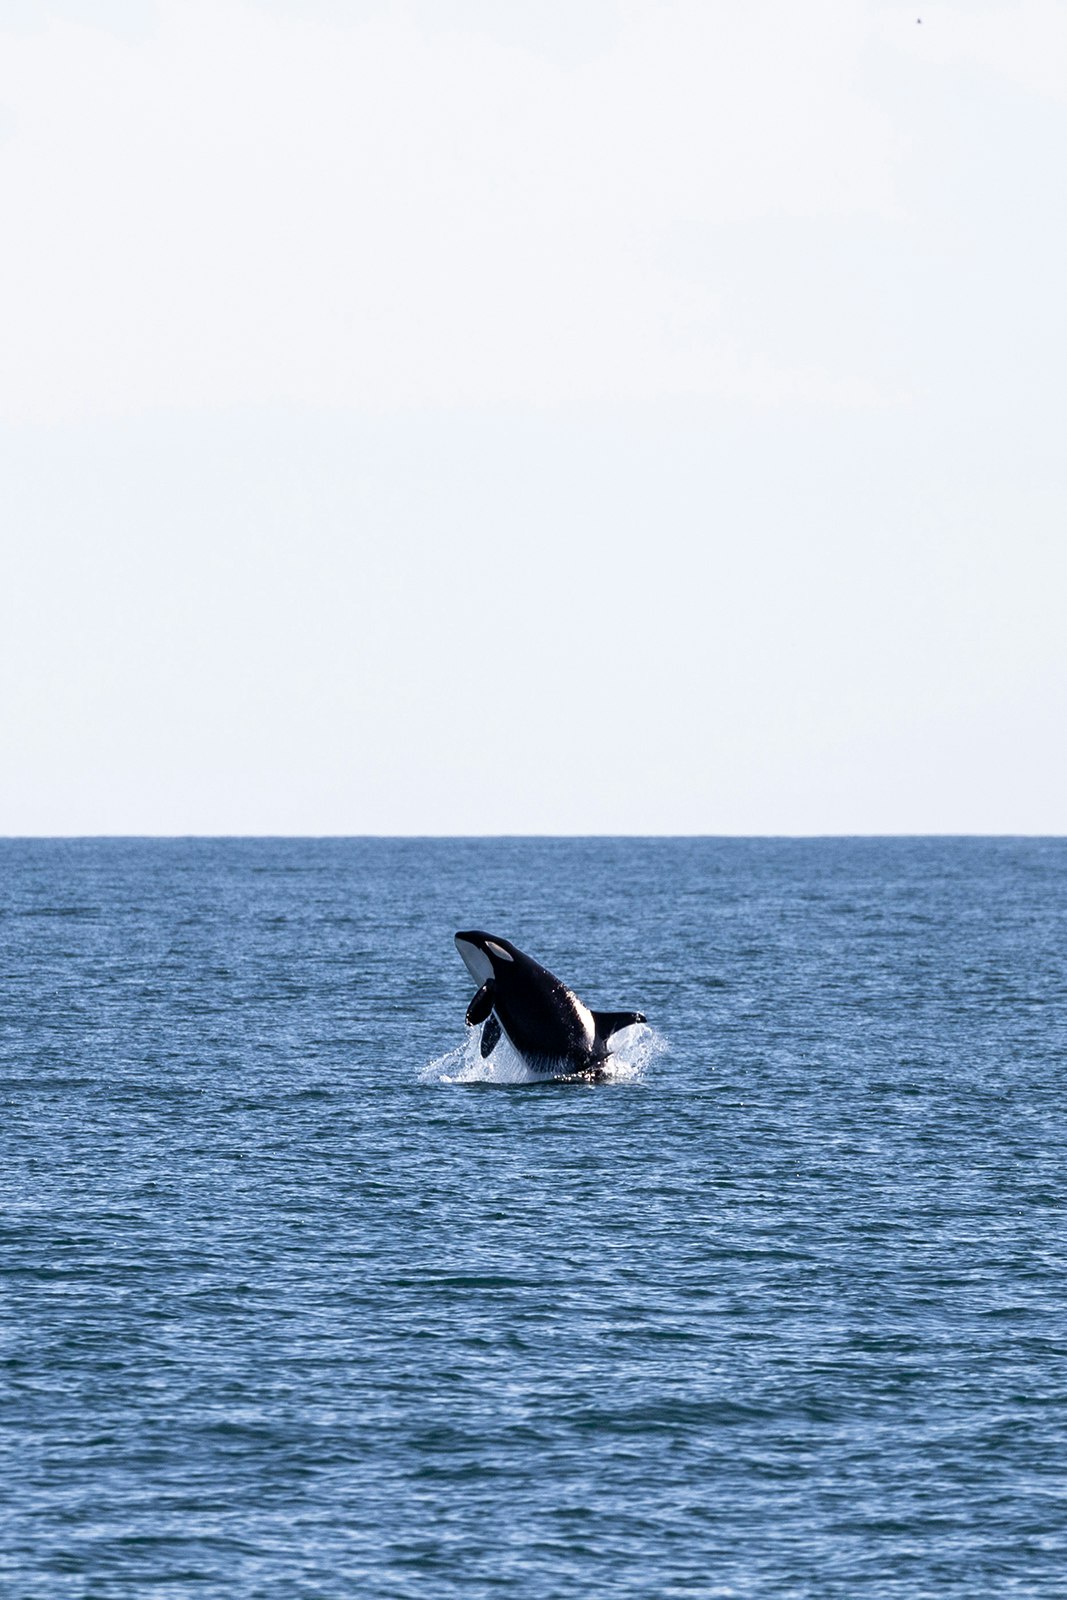 An orca breaching in the Gulf of Alaska